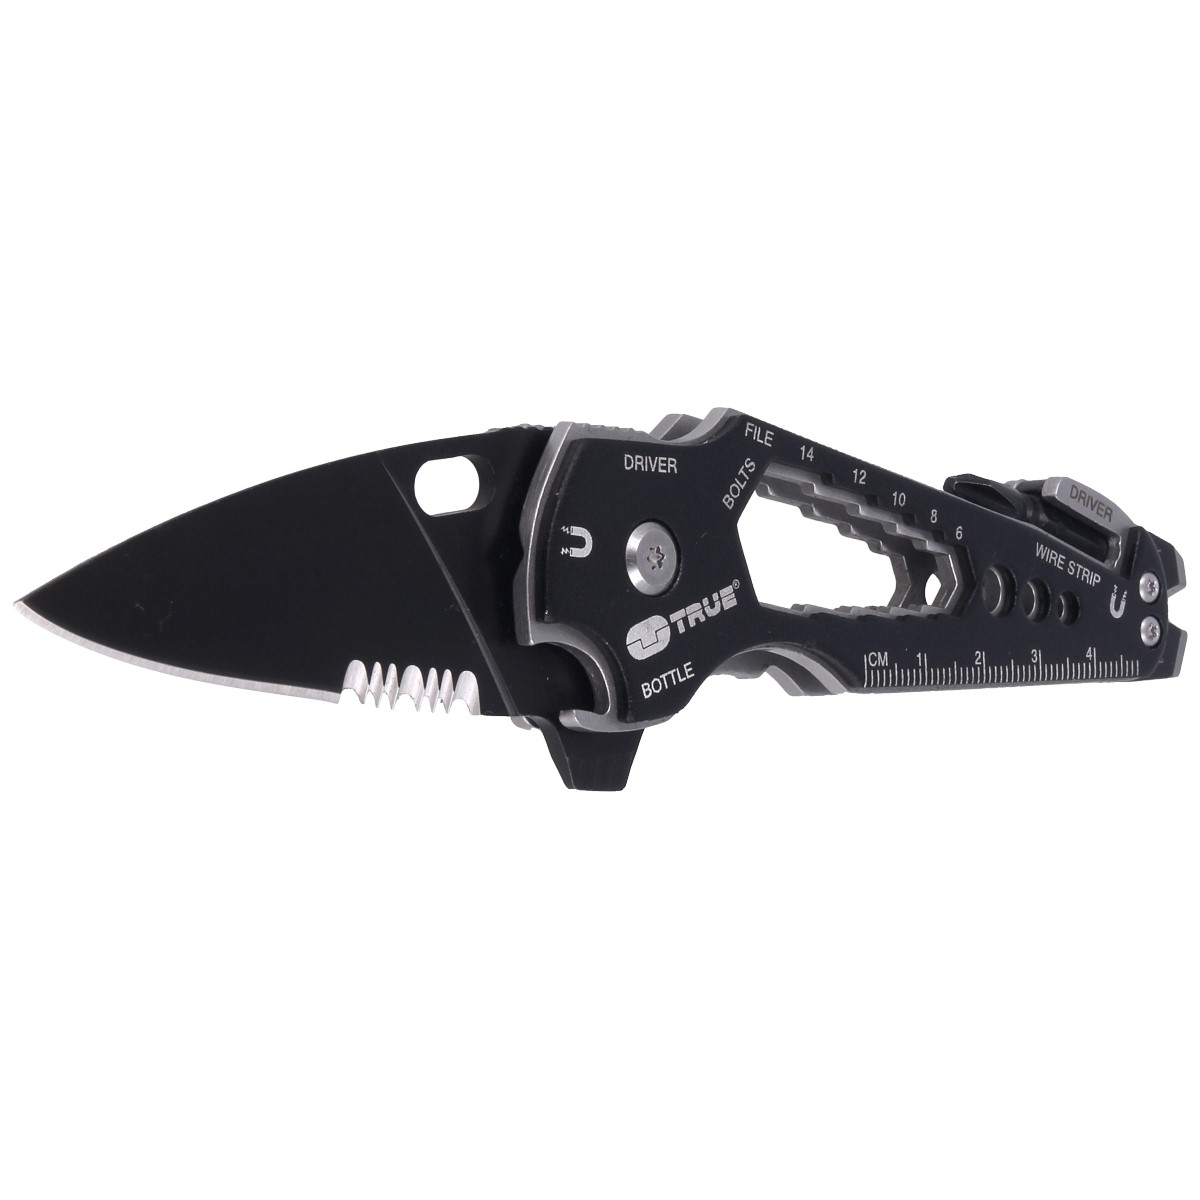 True utility Smartknife Multitool Black